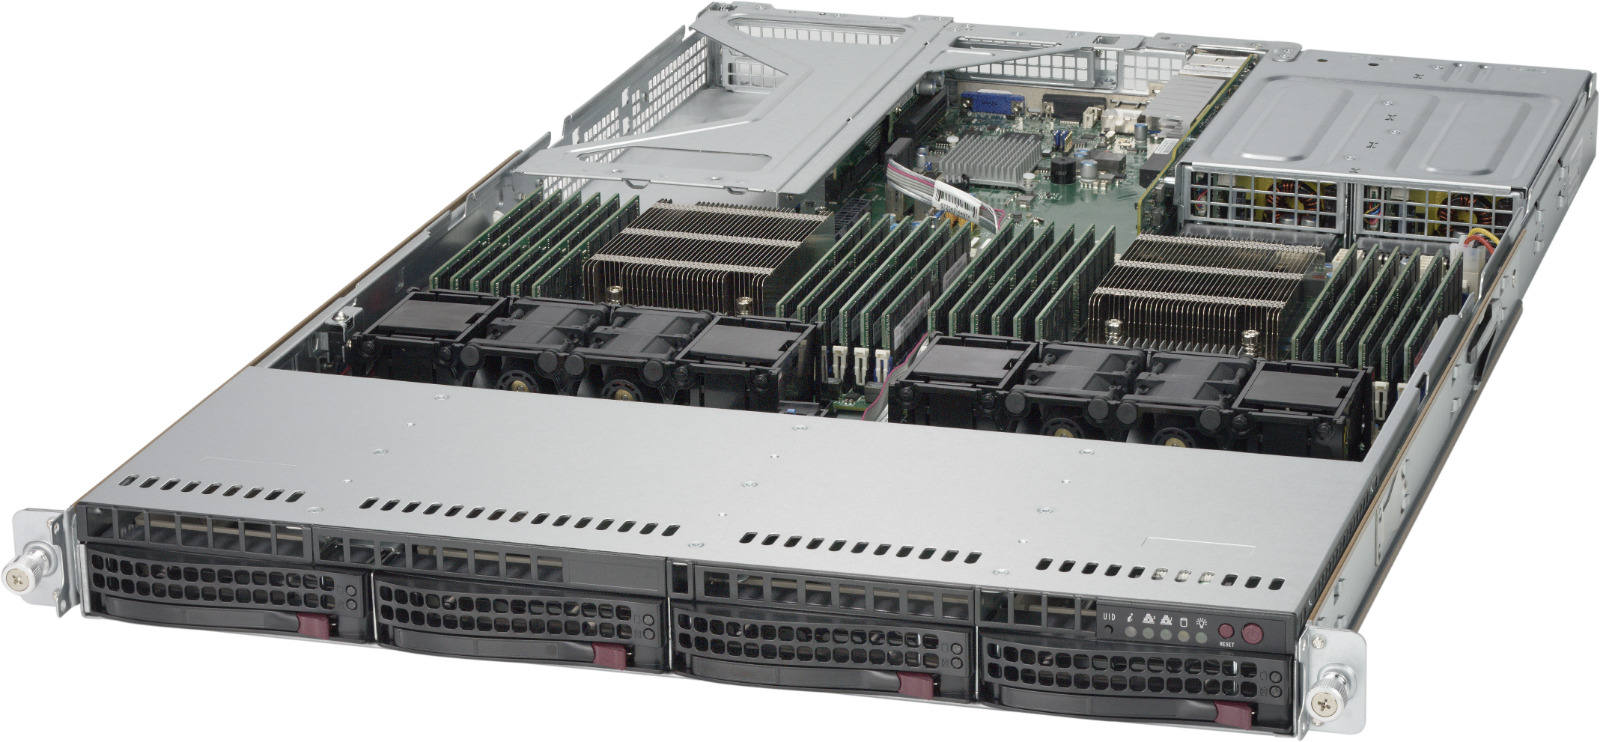 1U Supermicro Server X10DRU-i+ 2x Xeon E5-2690 V3 24 Cores 32GB 4x 10GBE-T 2PS